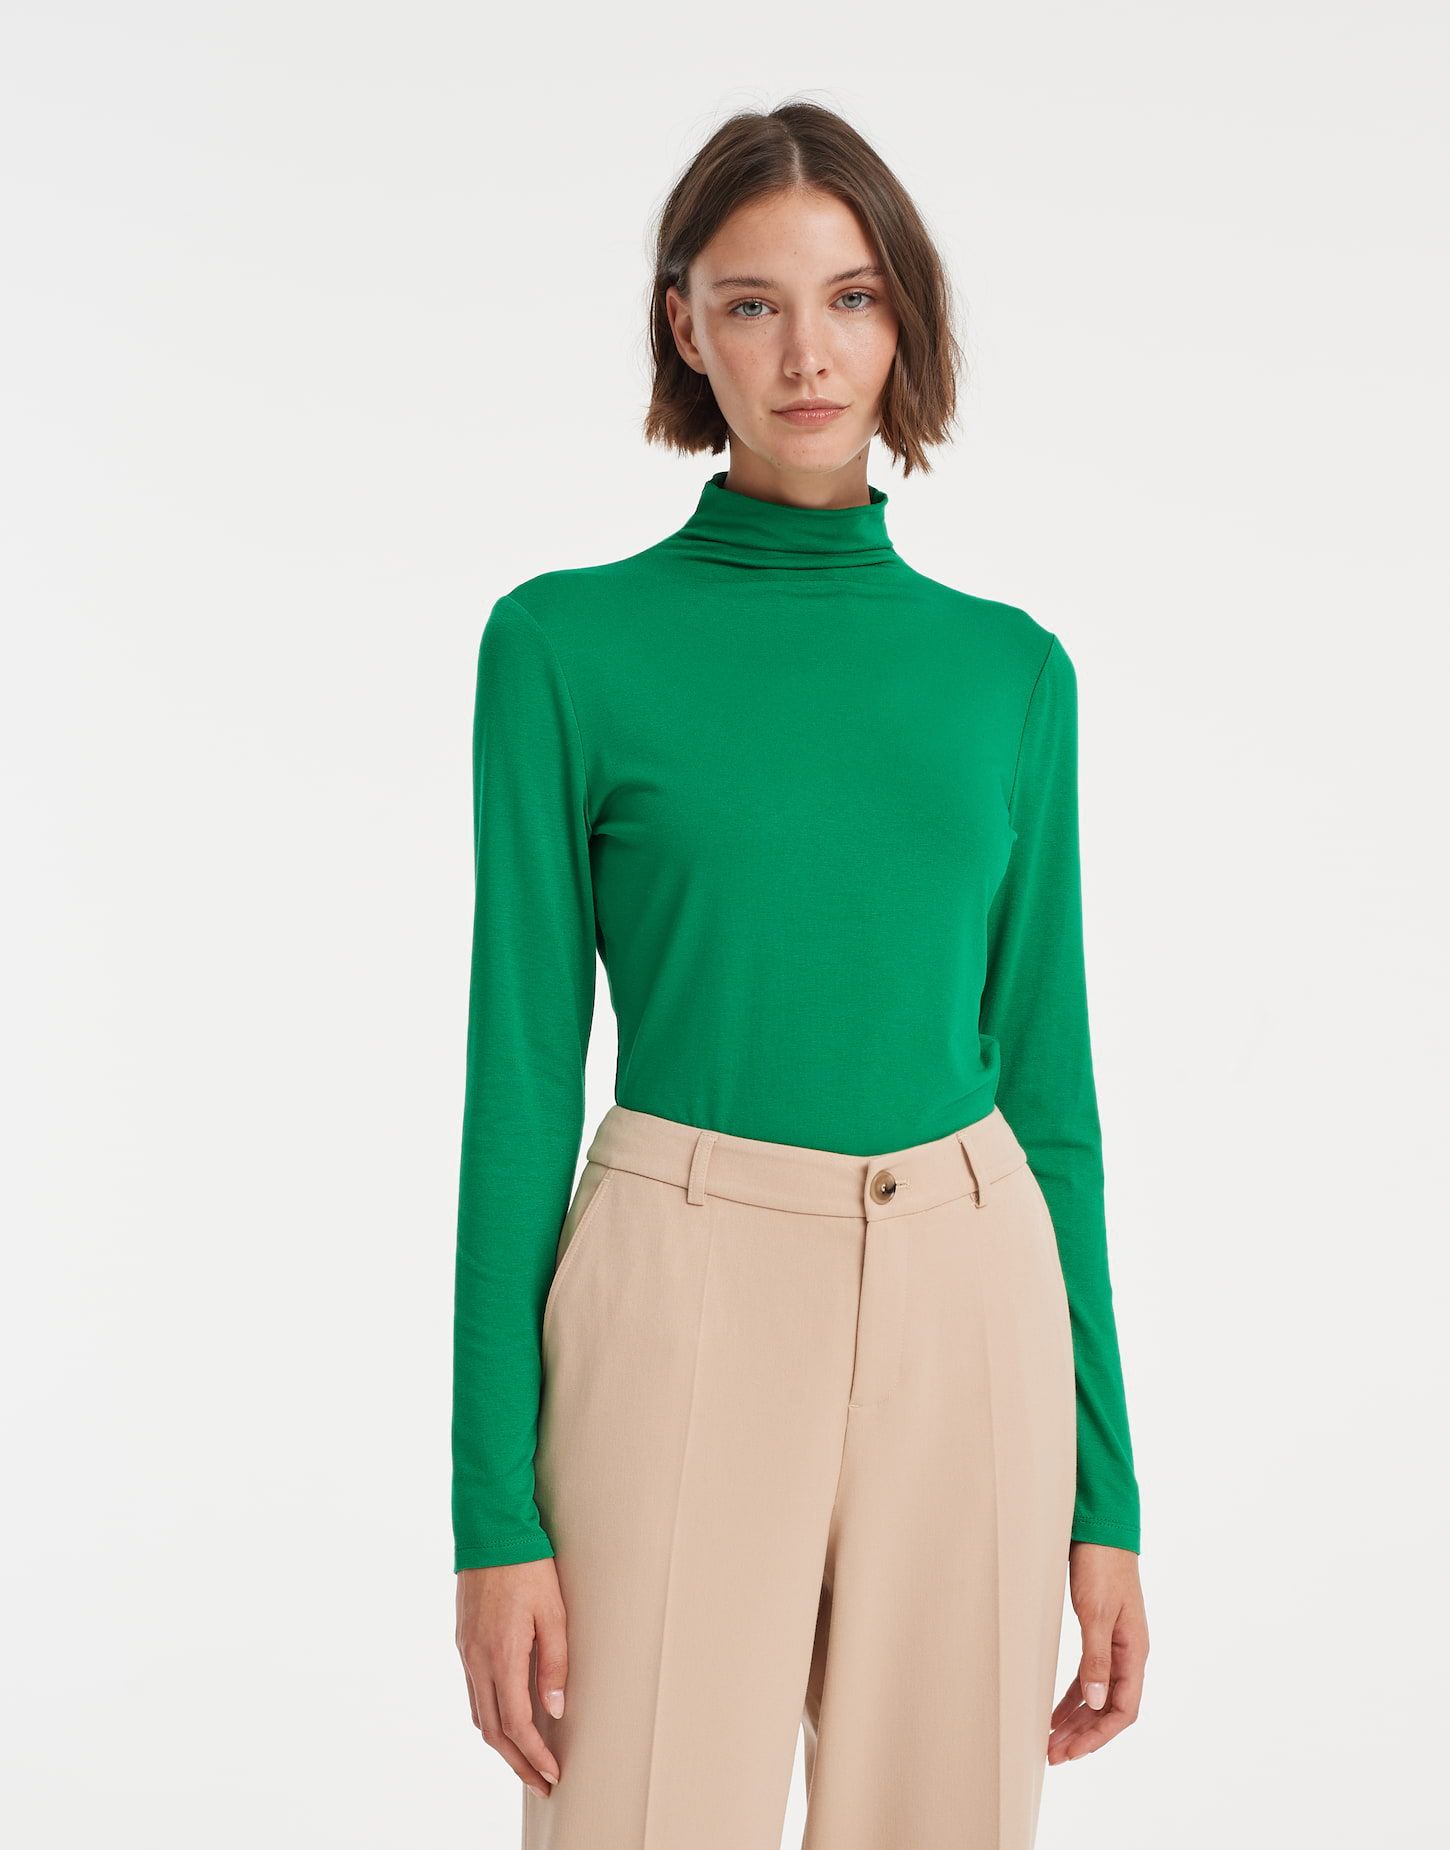 T-shirt OPUS sayar tulip green online bestellen | Henri\'s Fashion